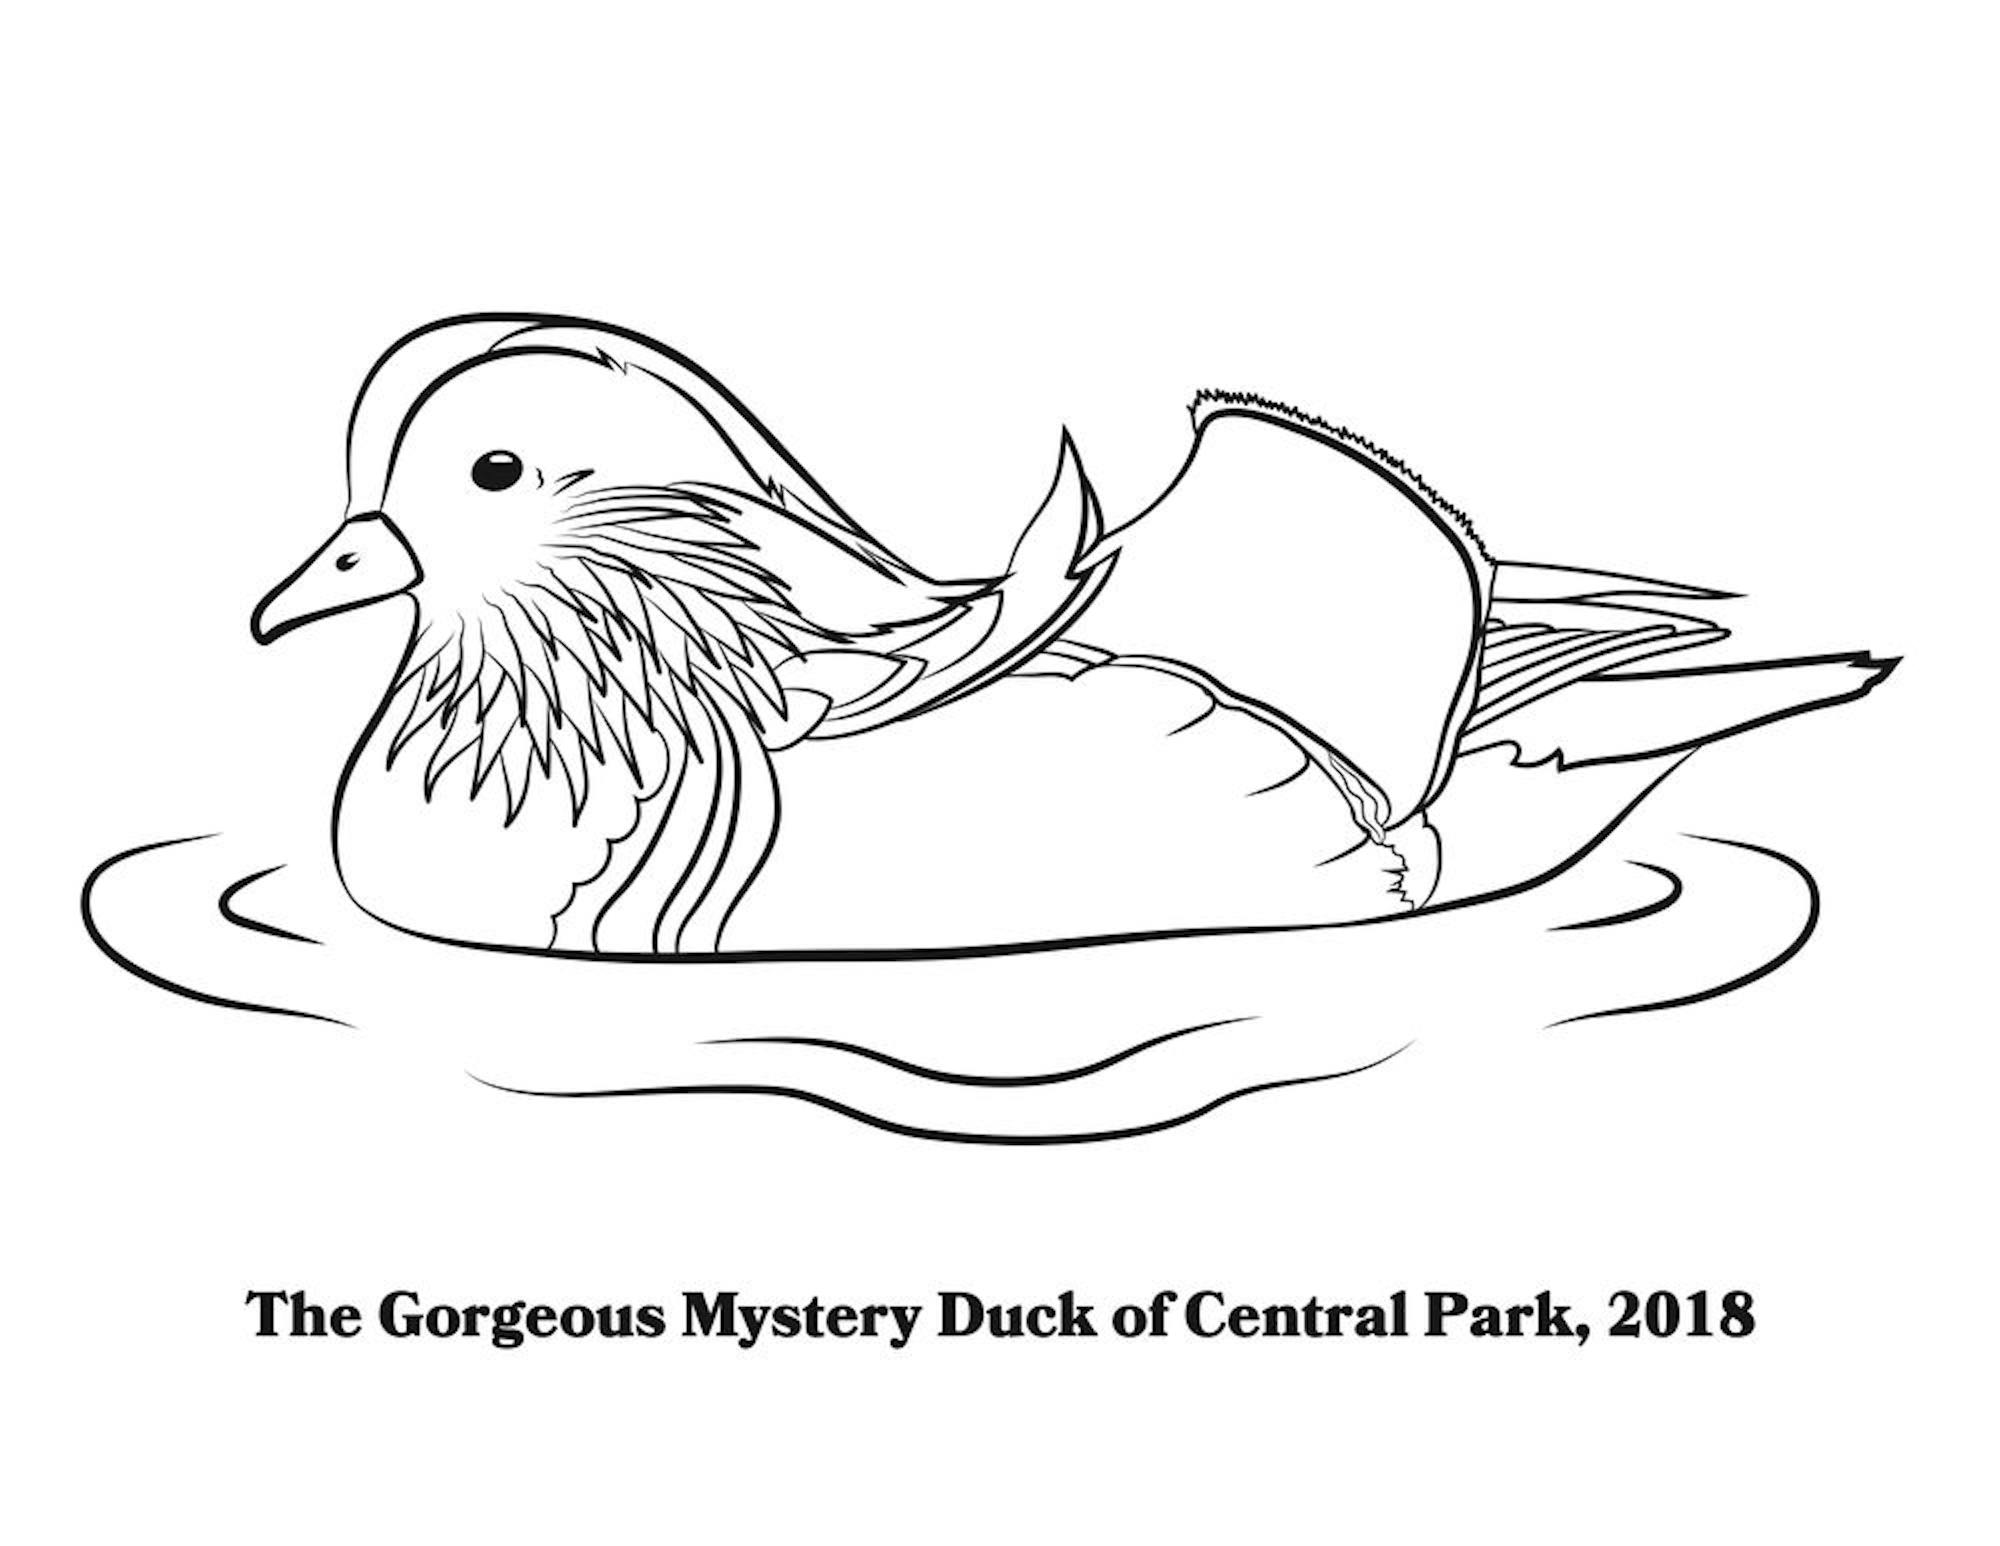 Artist: Jen Lewis
Instagram: https://www.instagram.com/thisjenlewis/
Website: https://www.jenlewis.website/
Hot Duck Information: https://www.thecut.com/2018/11/everyone-loves-the-hot-duck.html